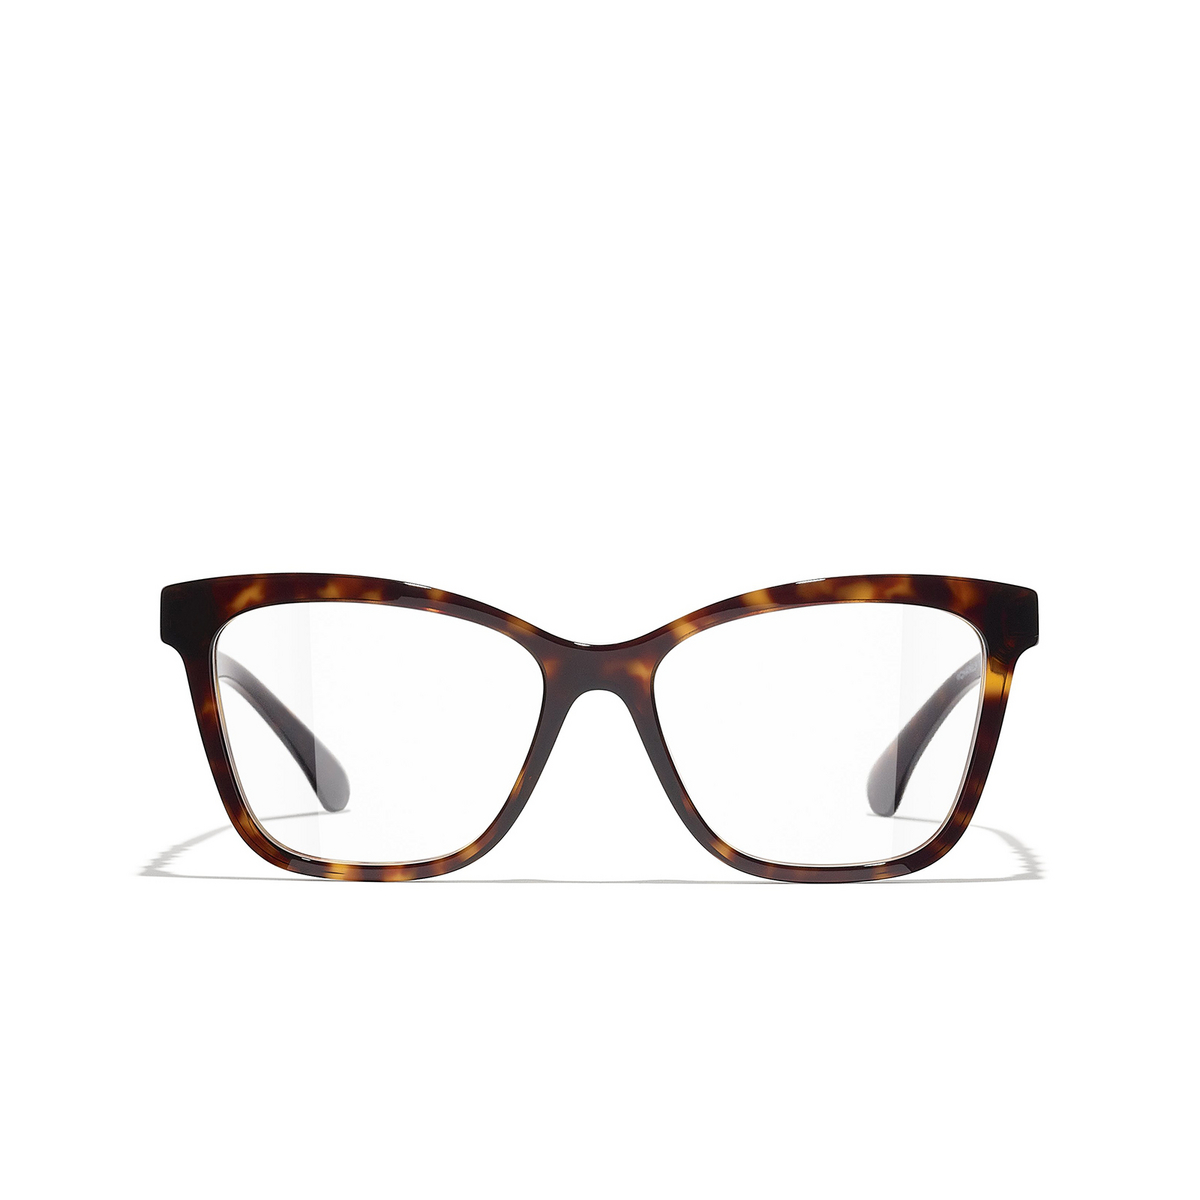 CHANEL square Eyeglasses C714 Dark Tortoise